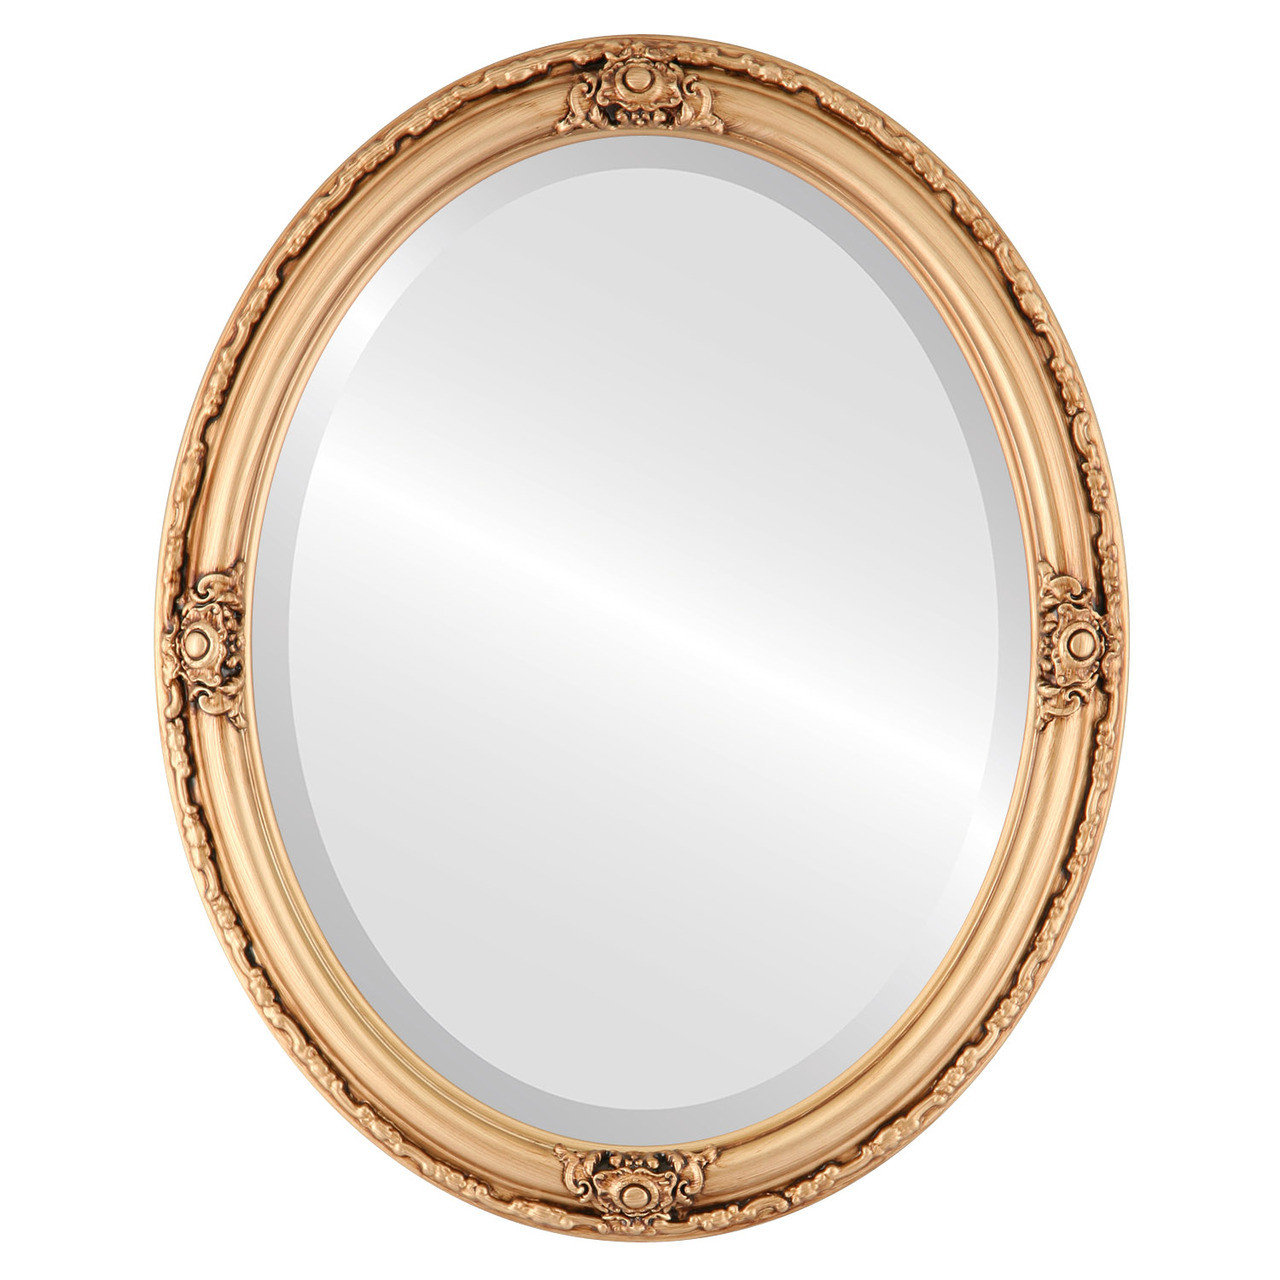 Jefferson Oval framed mirror Gold Paint |Victorian Frames